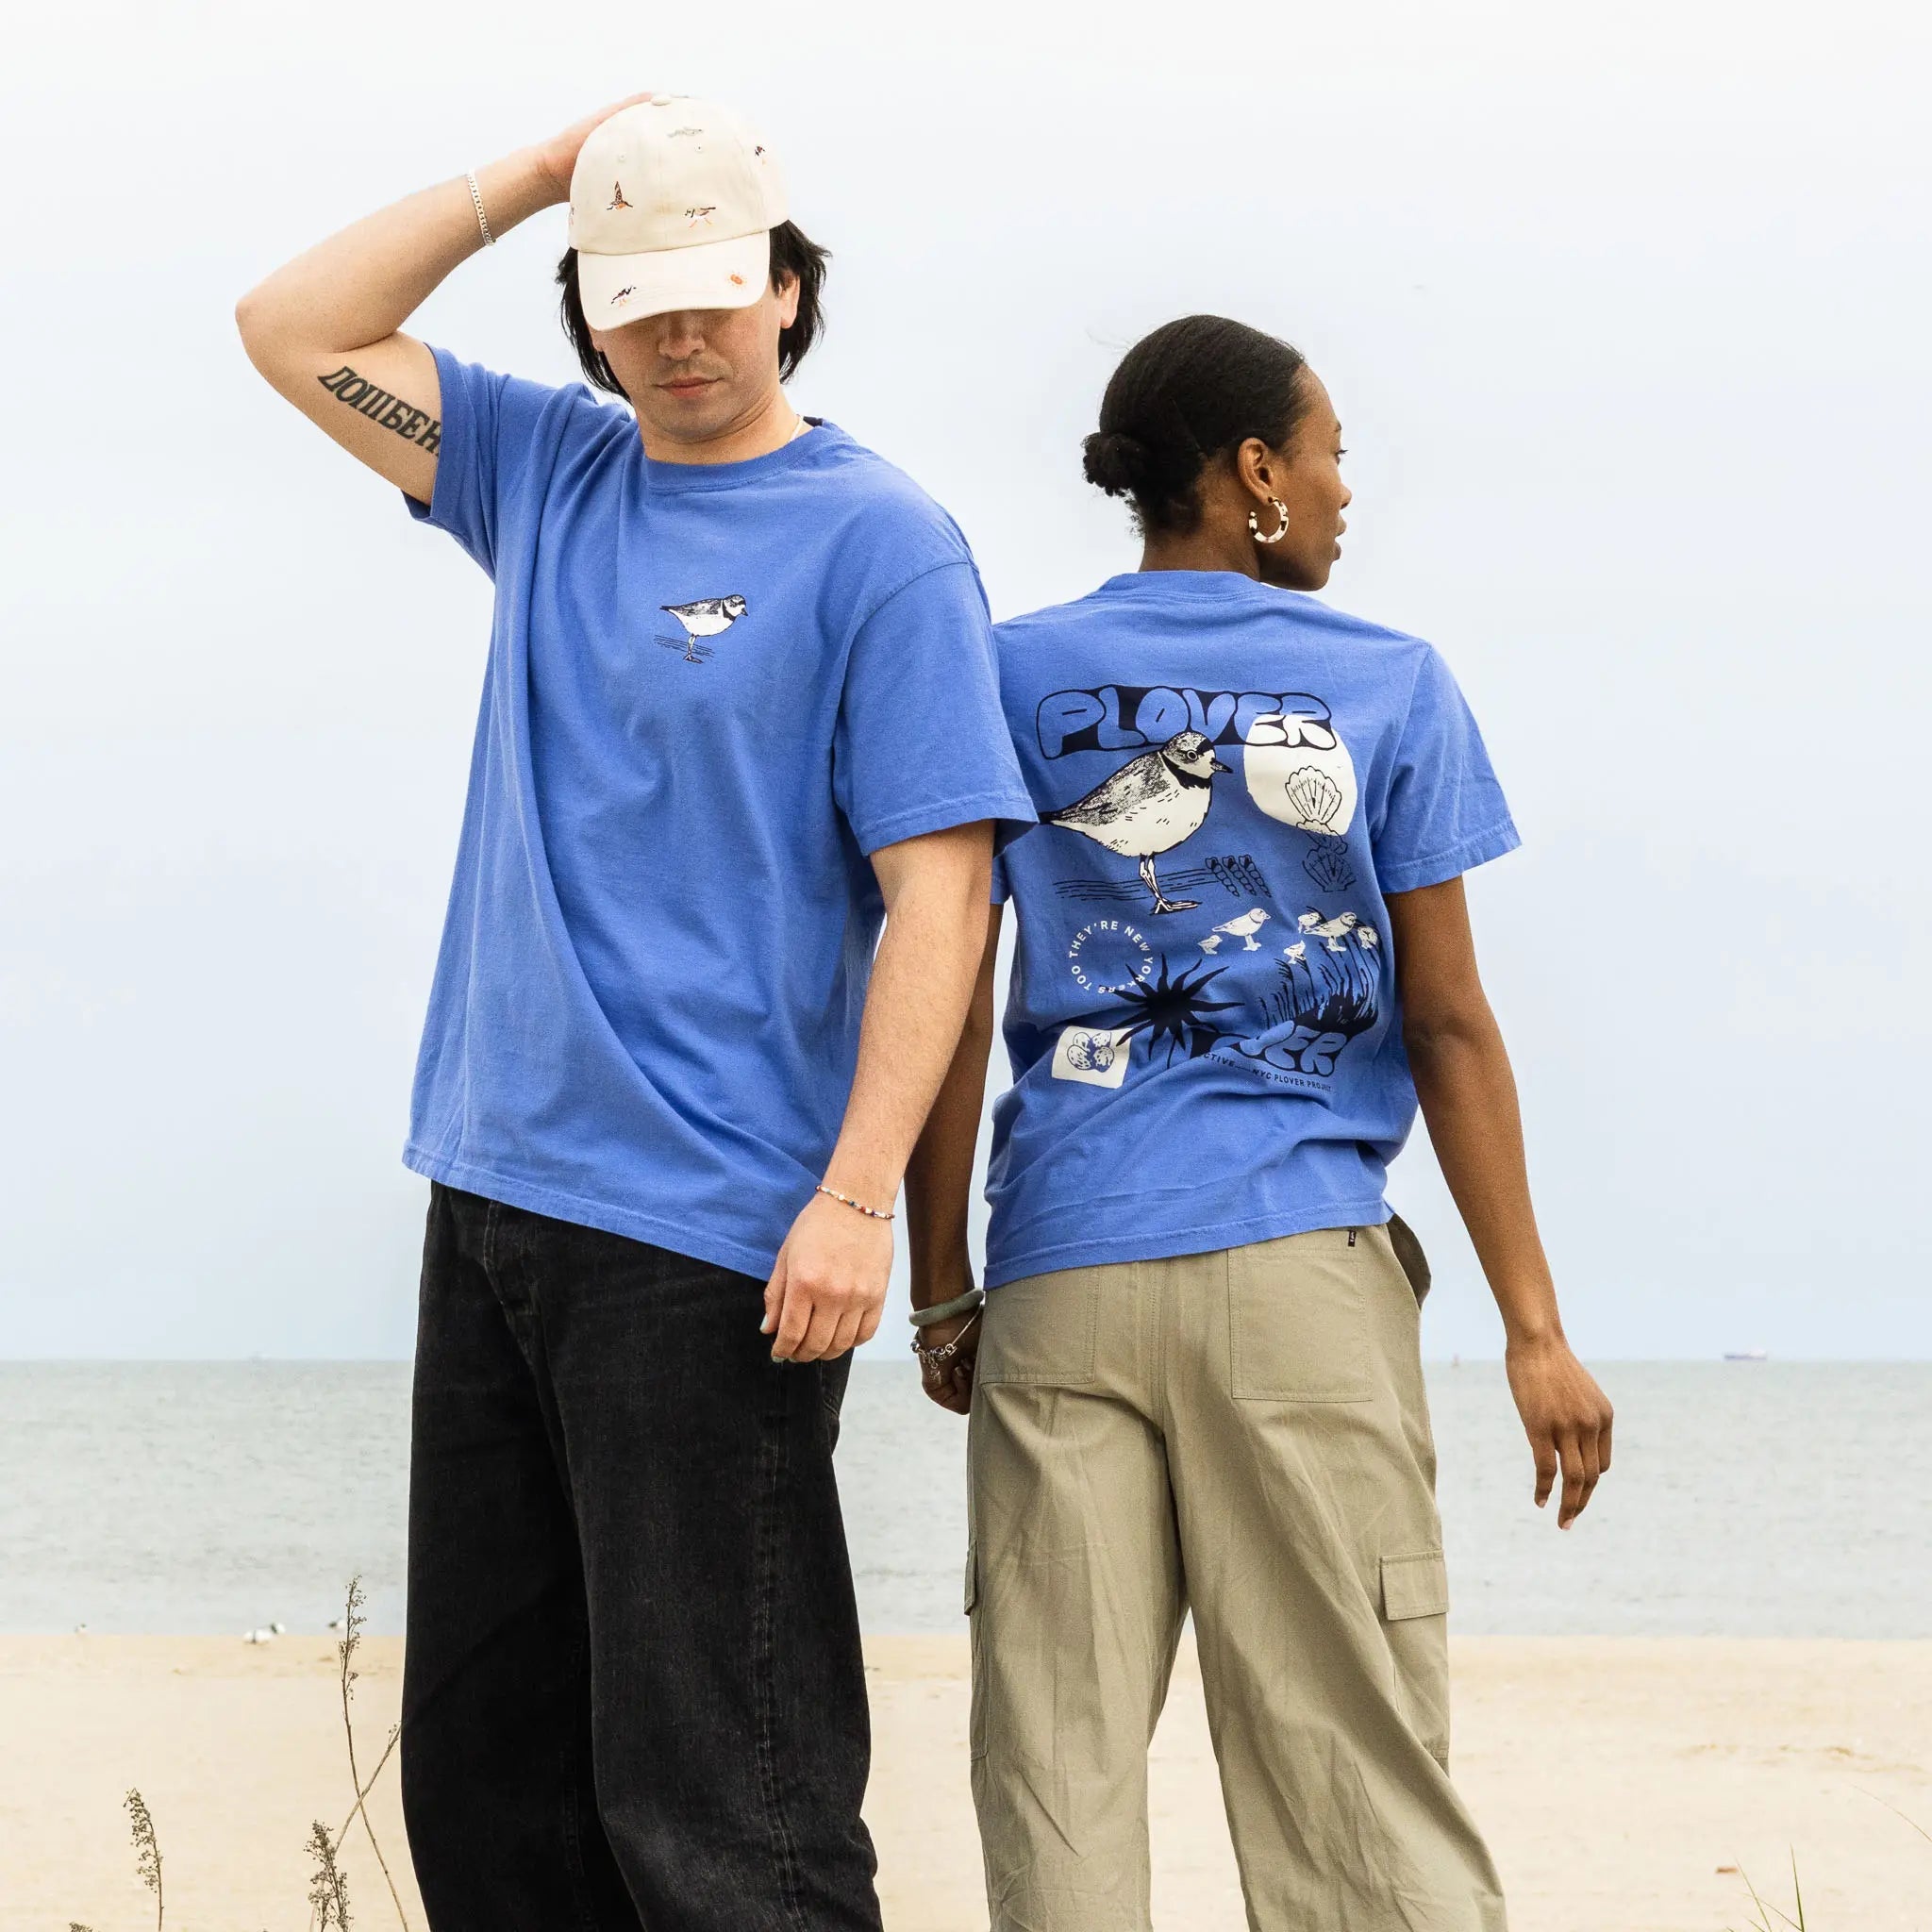 Bird Collective - Plover Lover T-Shirt - S - Ocean